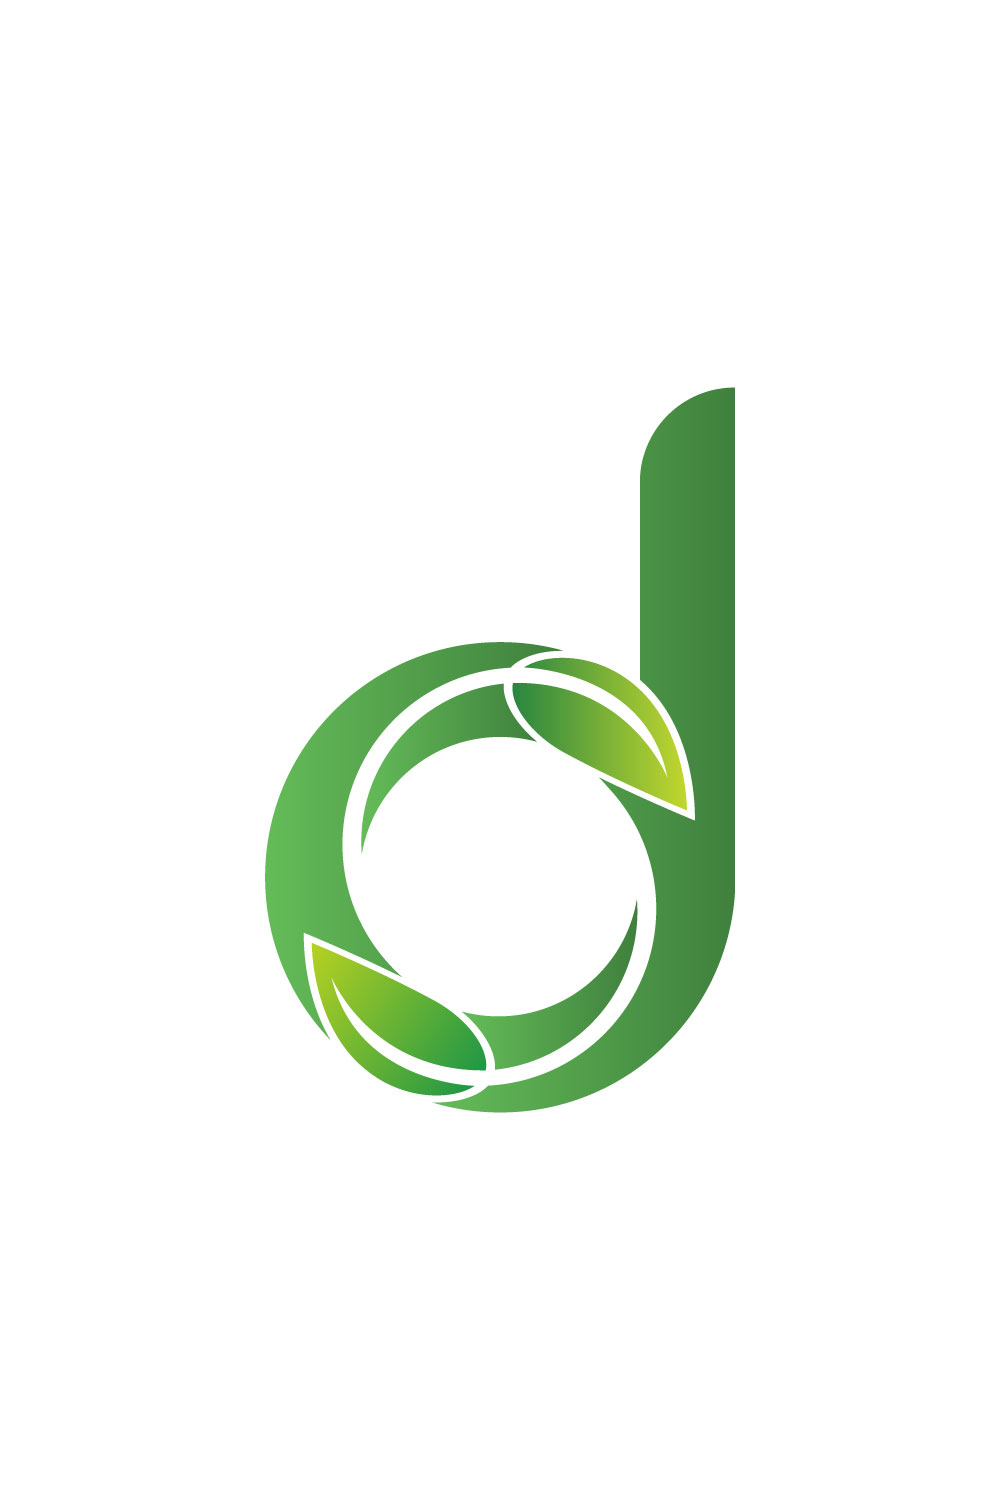 Letter D Leafy Green Logo Design pinterest image.